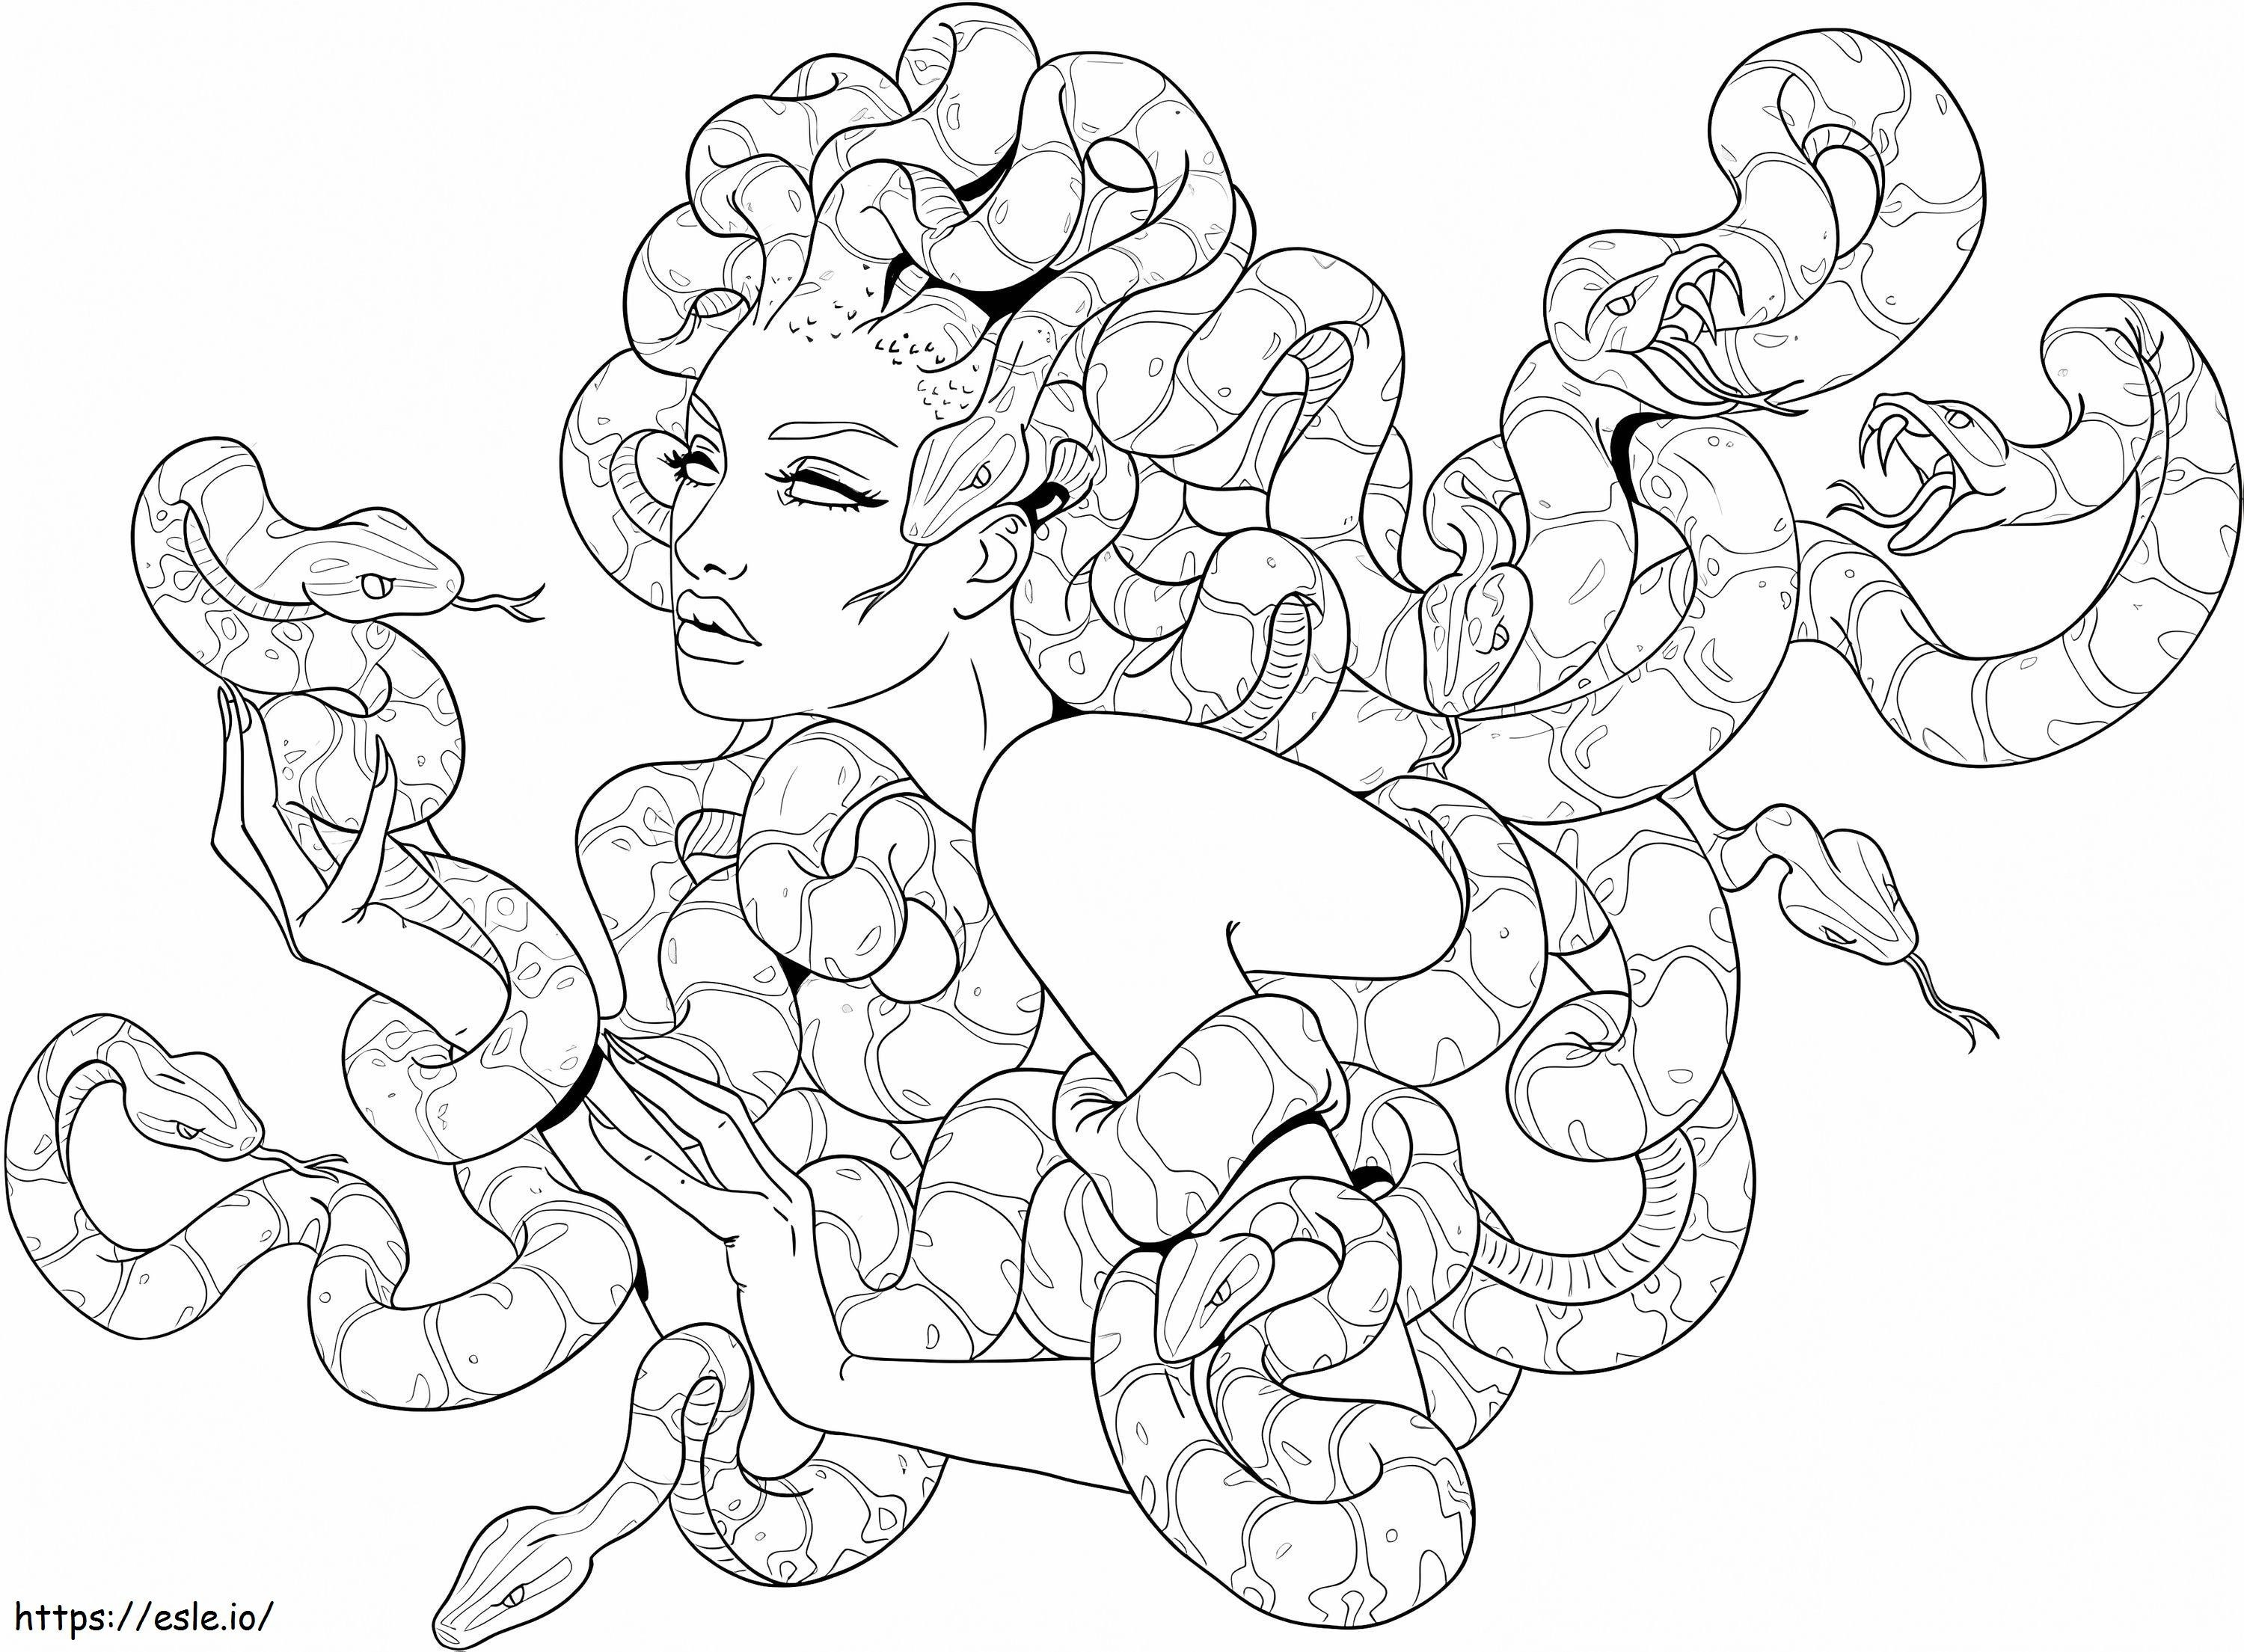 Korkunç Medusa boyama